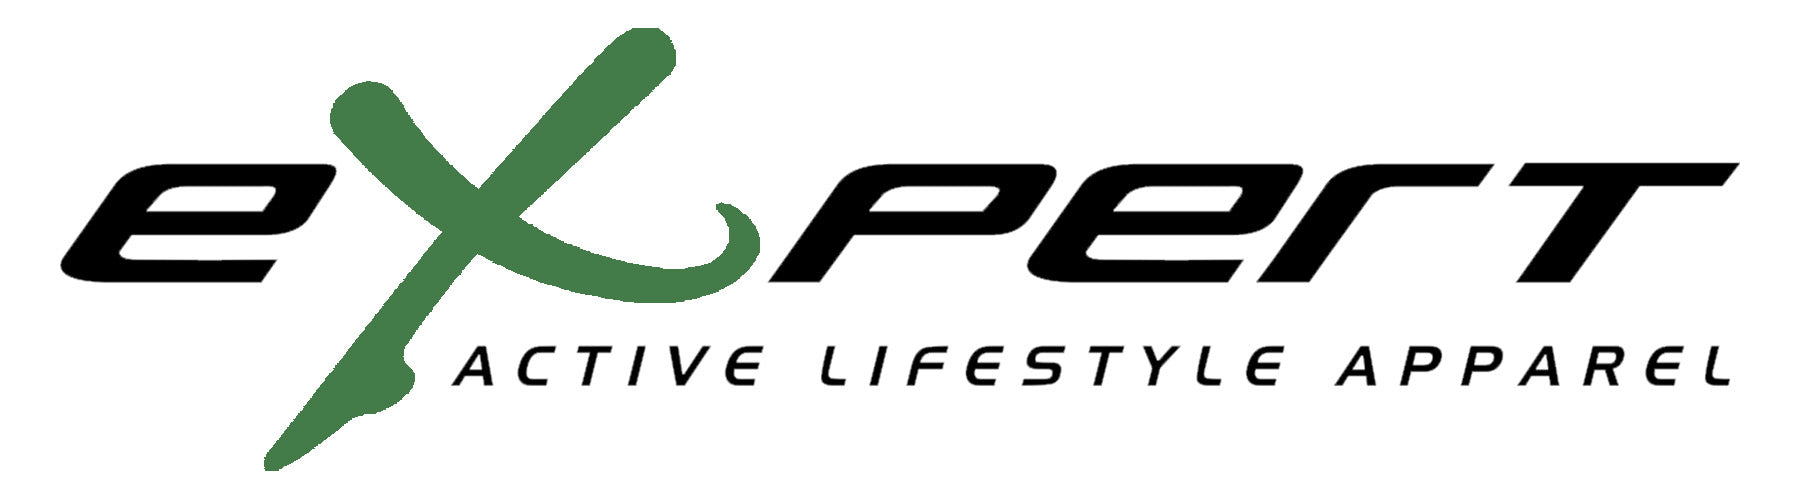 lifestyle brands logo